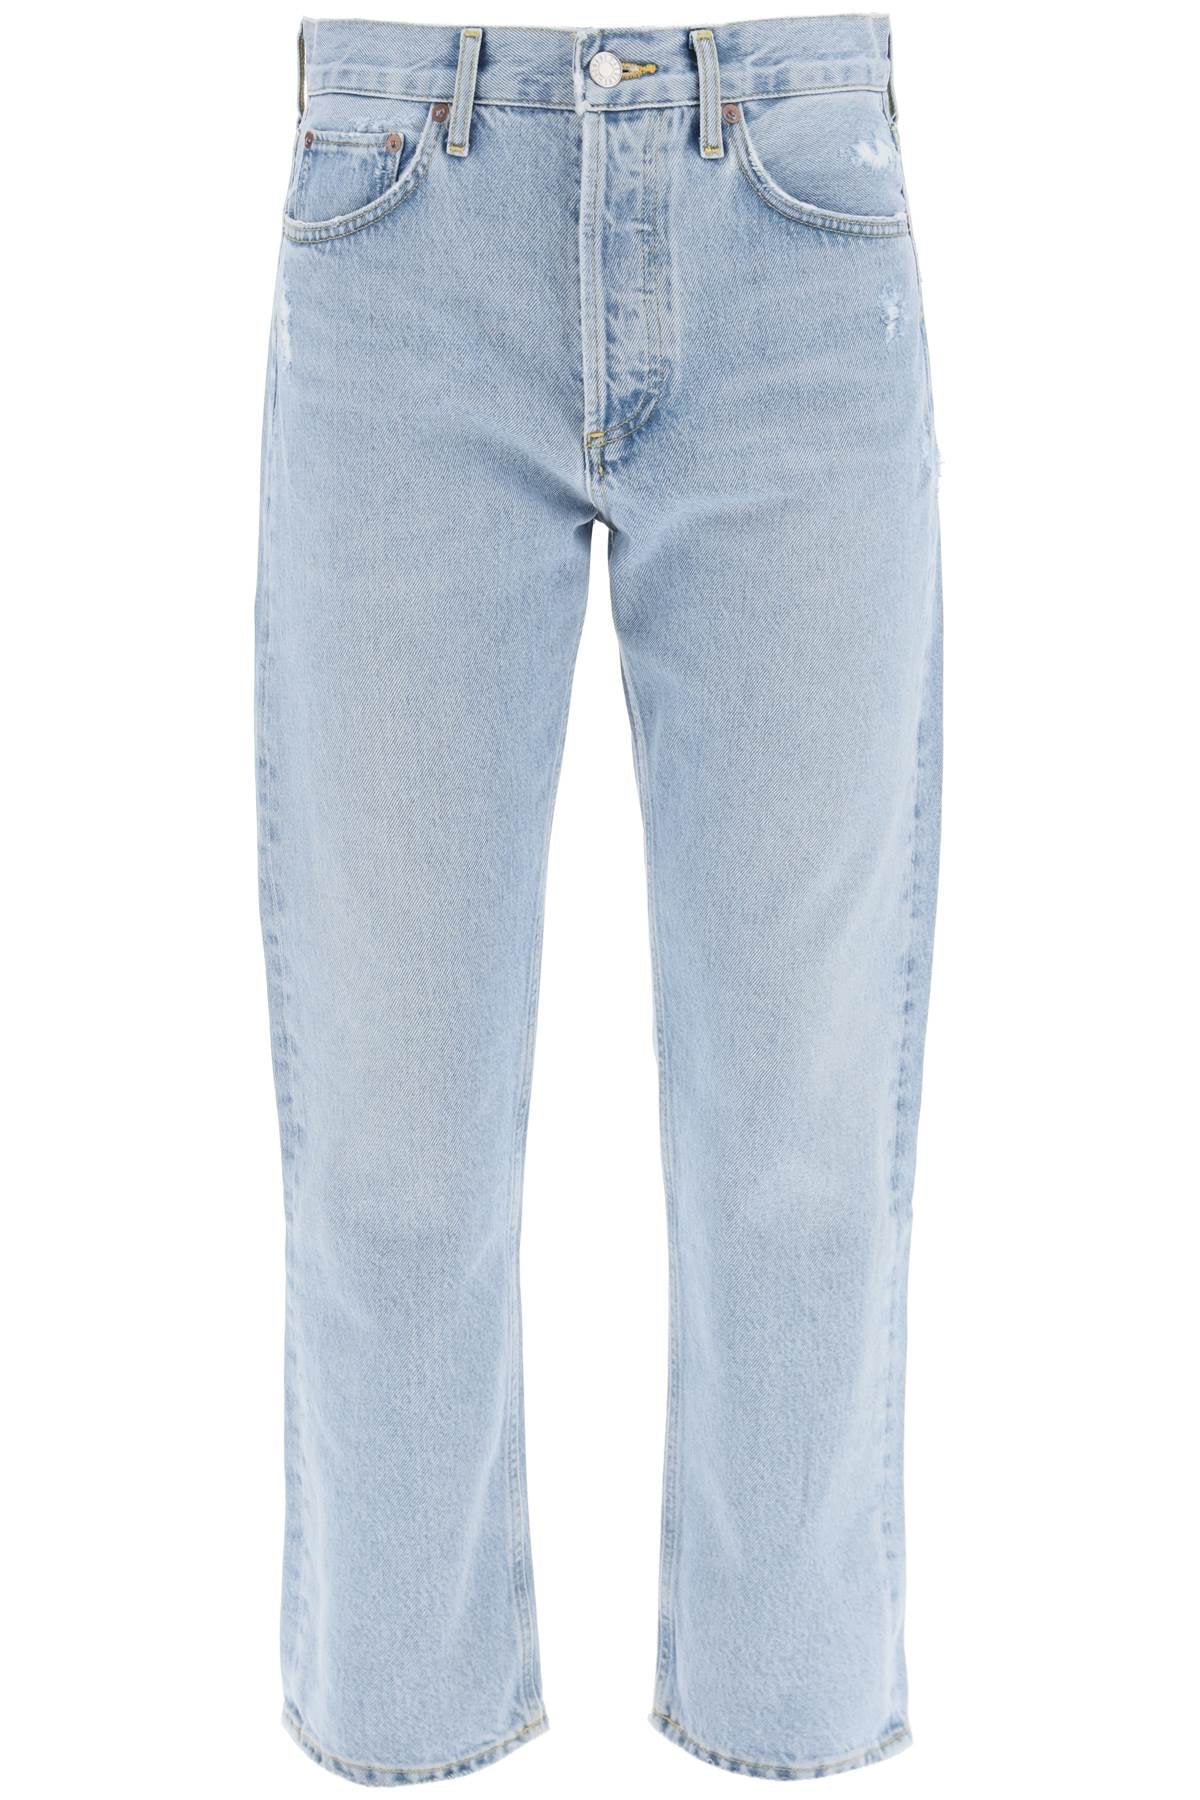 Agolde 'parker' jeans with light wash-0